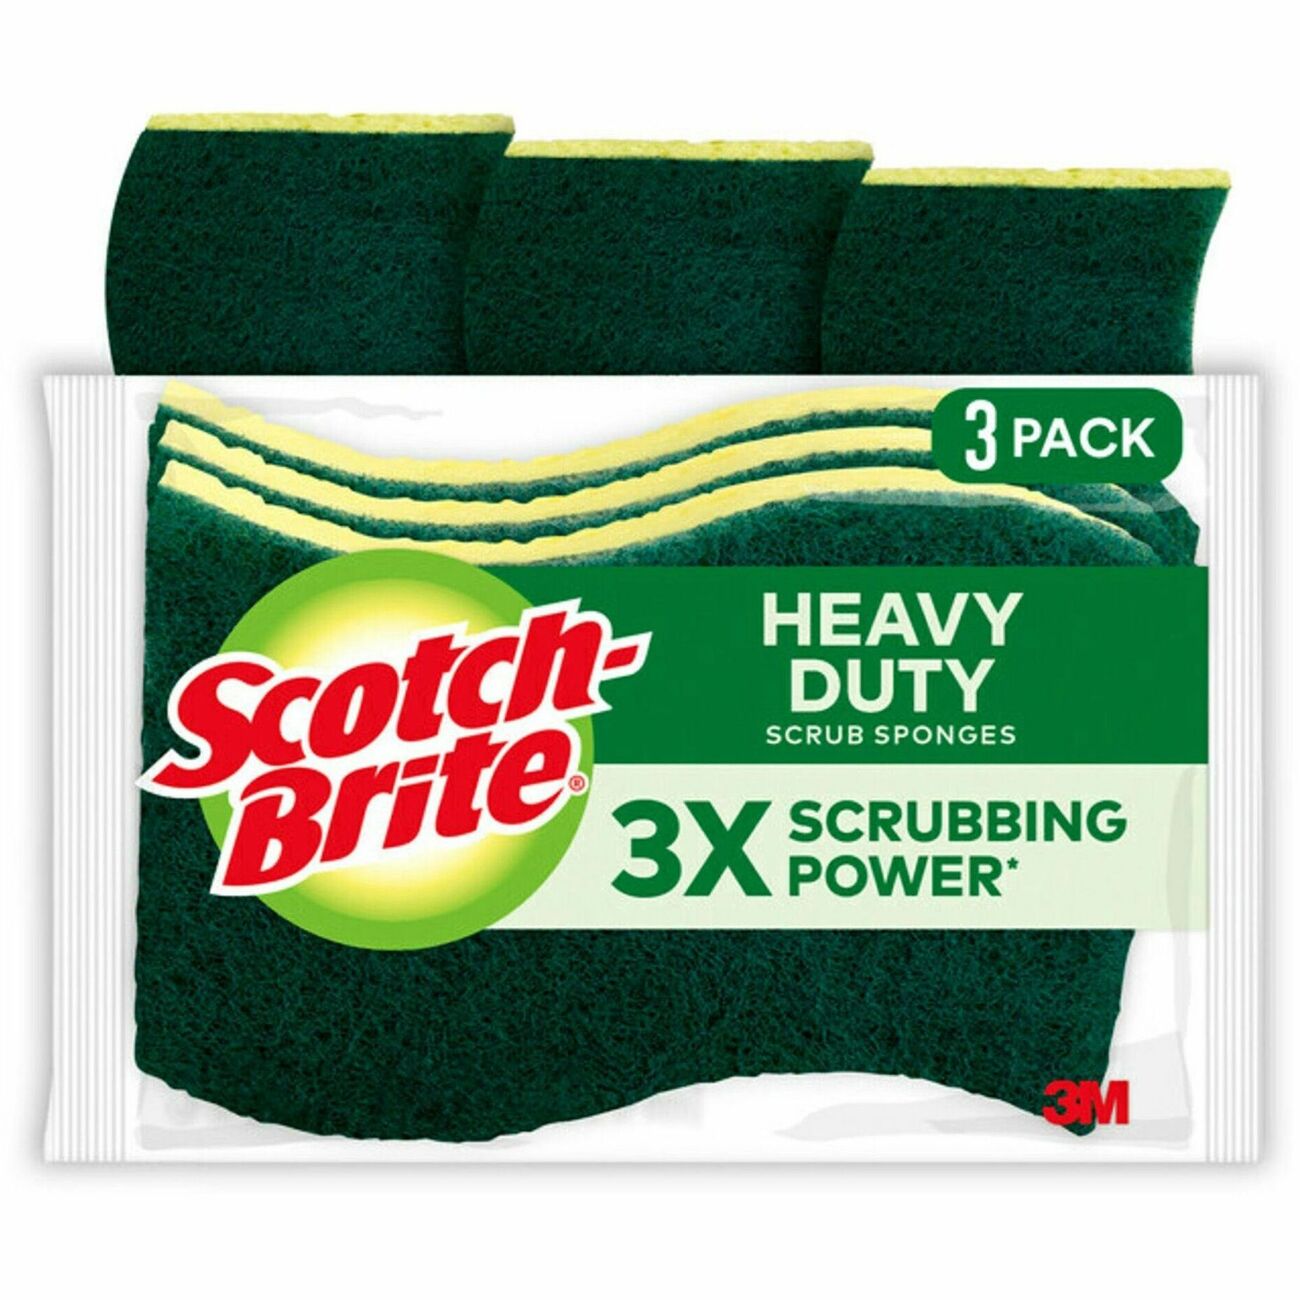 Scotch-Brite Reusable Wipes 40 Sheets/Pkg